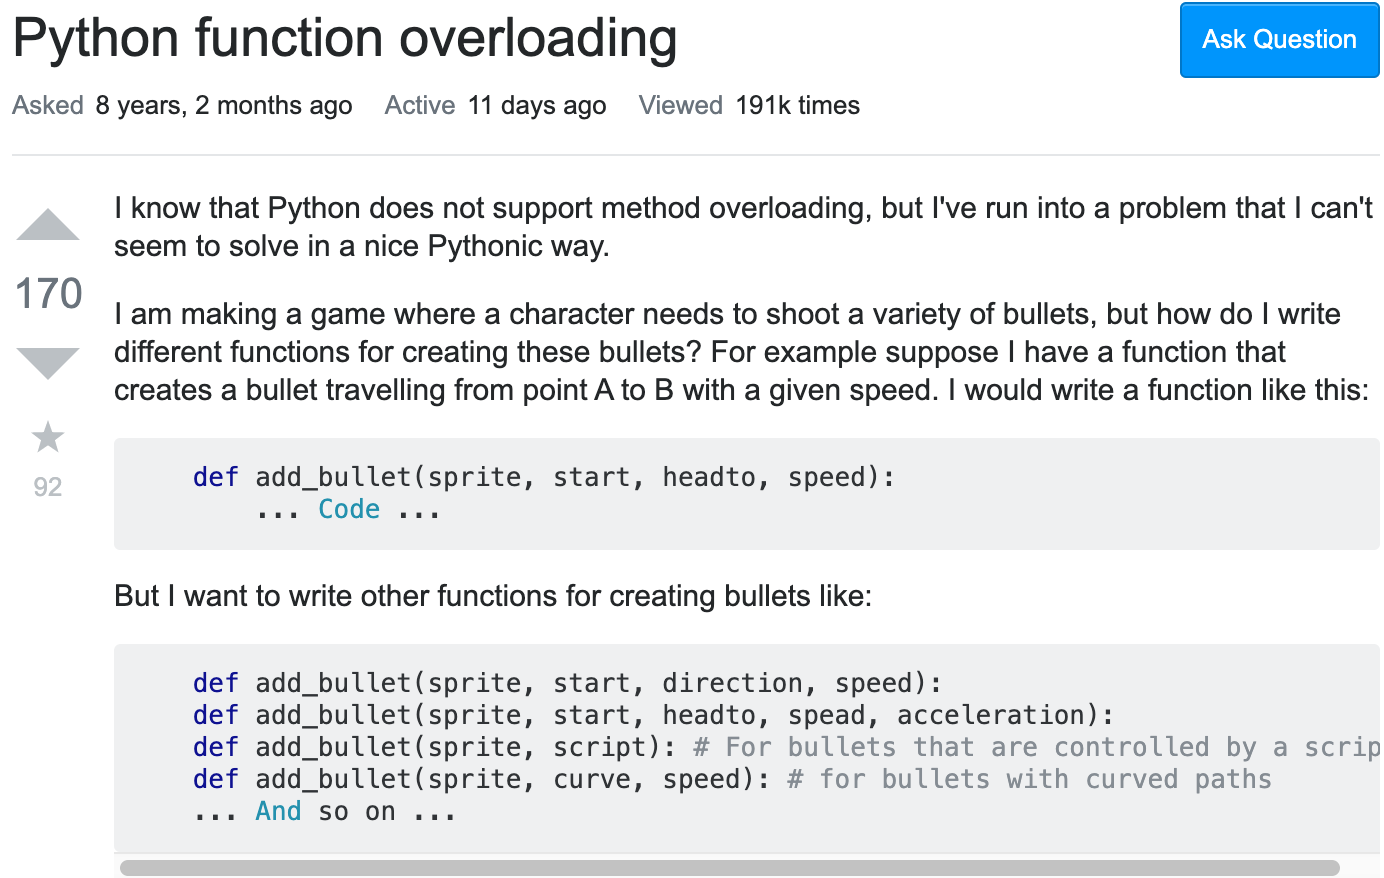 Operator Overloading In Python